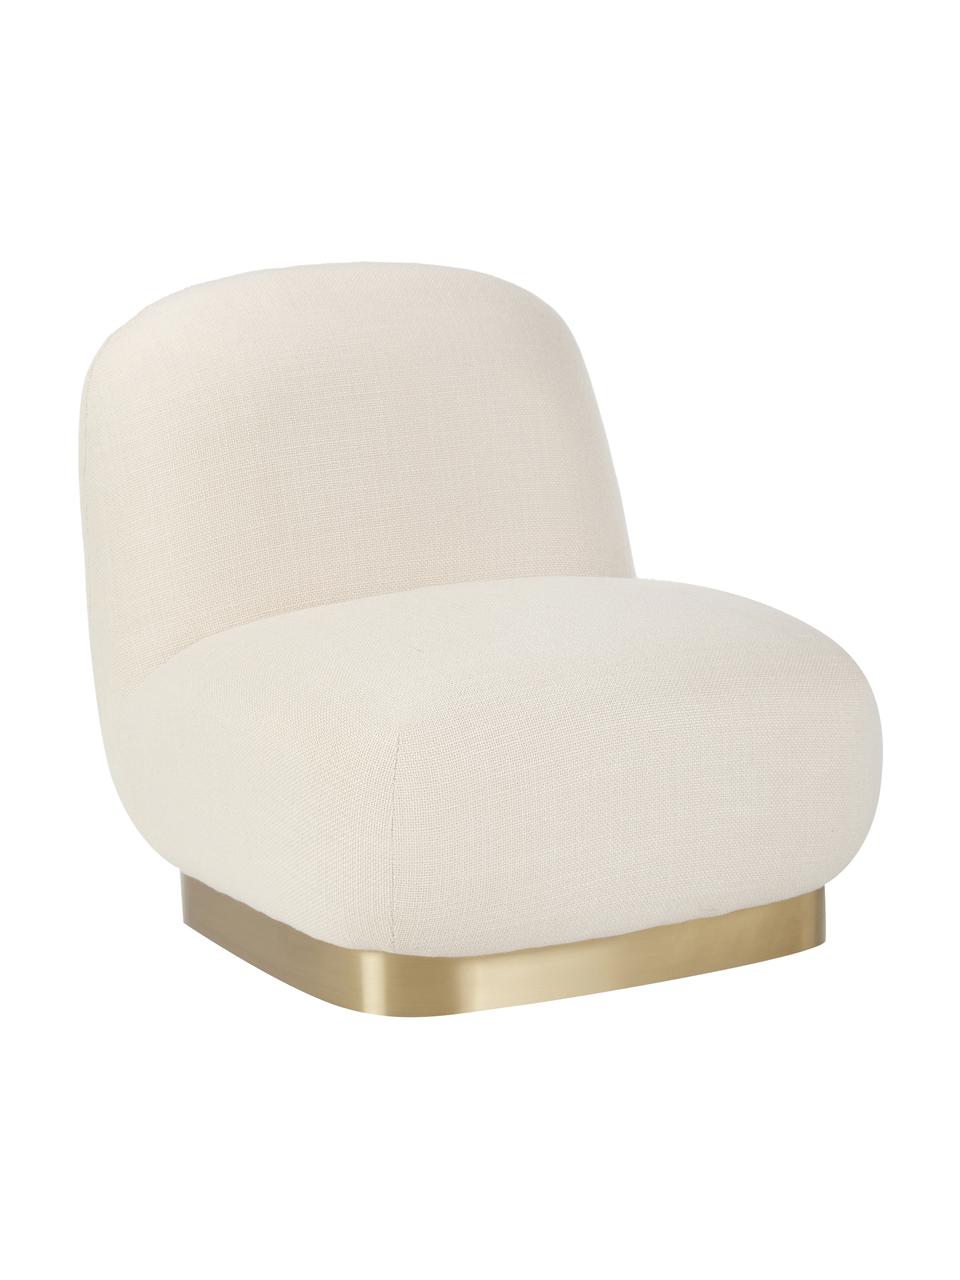 Cocktail fauteuil Elsie in crèmewit, Bekleding: 84% polyester, 16% acryl, Frame: multiplex, Voet: gecoat metaal, Geweven stof crèmewit/goudkleurig, B 77 x H 84 cm